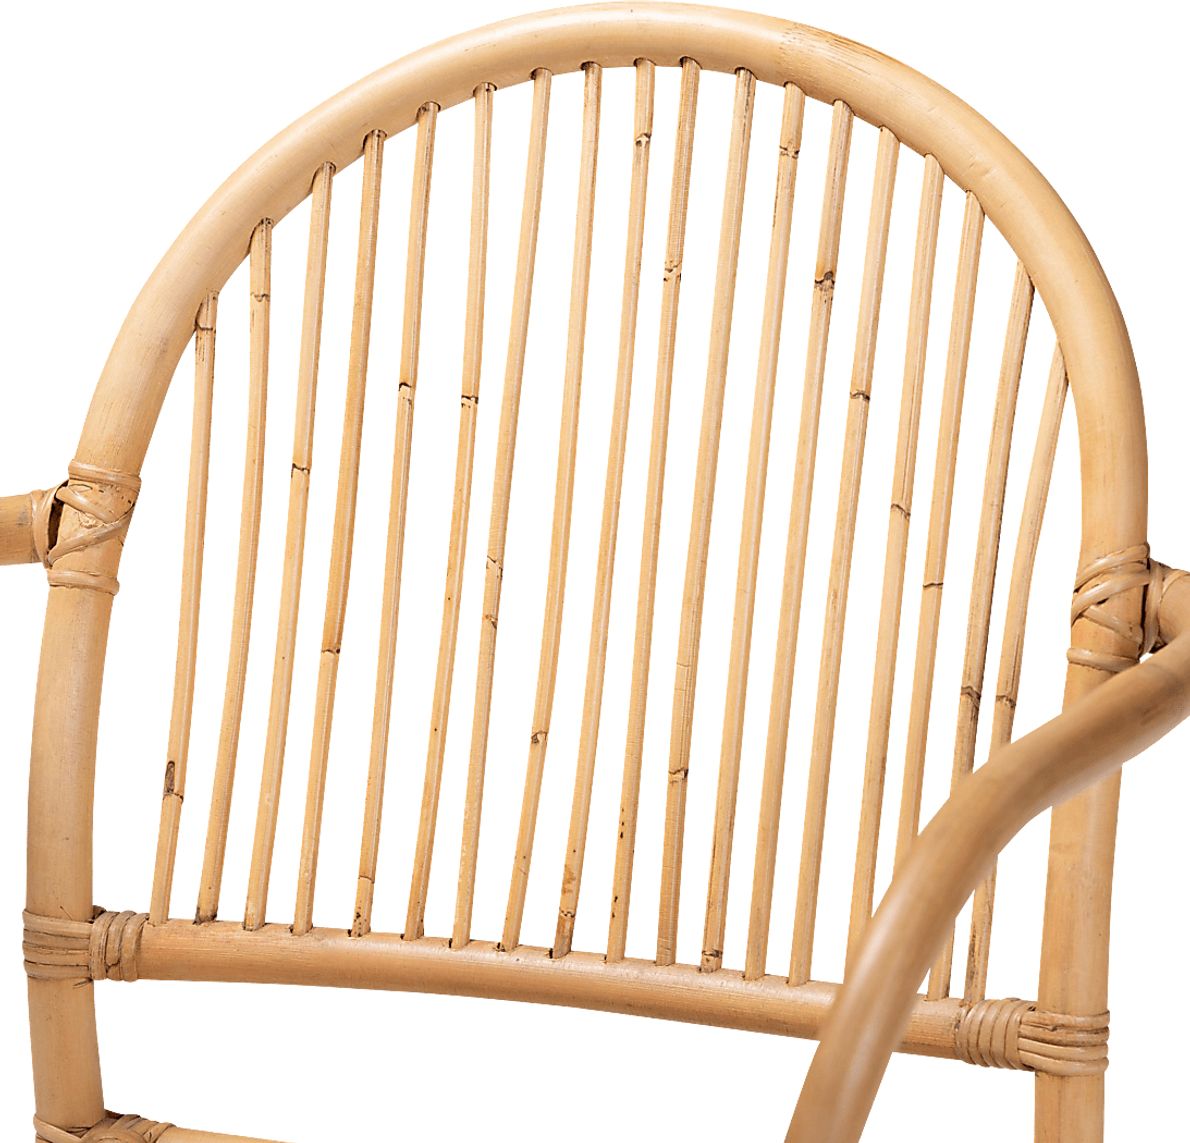 Veralen Brown Arm Chair